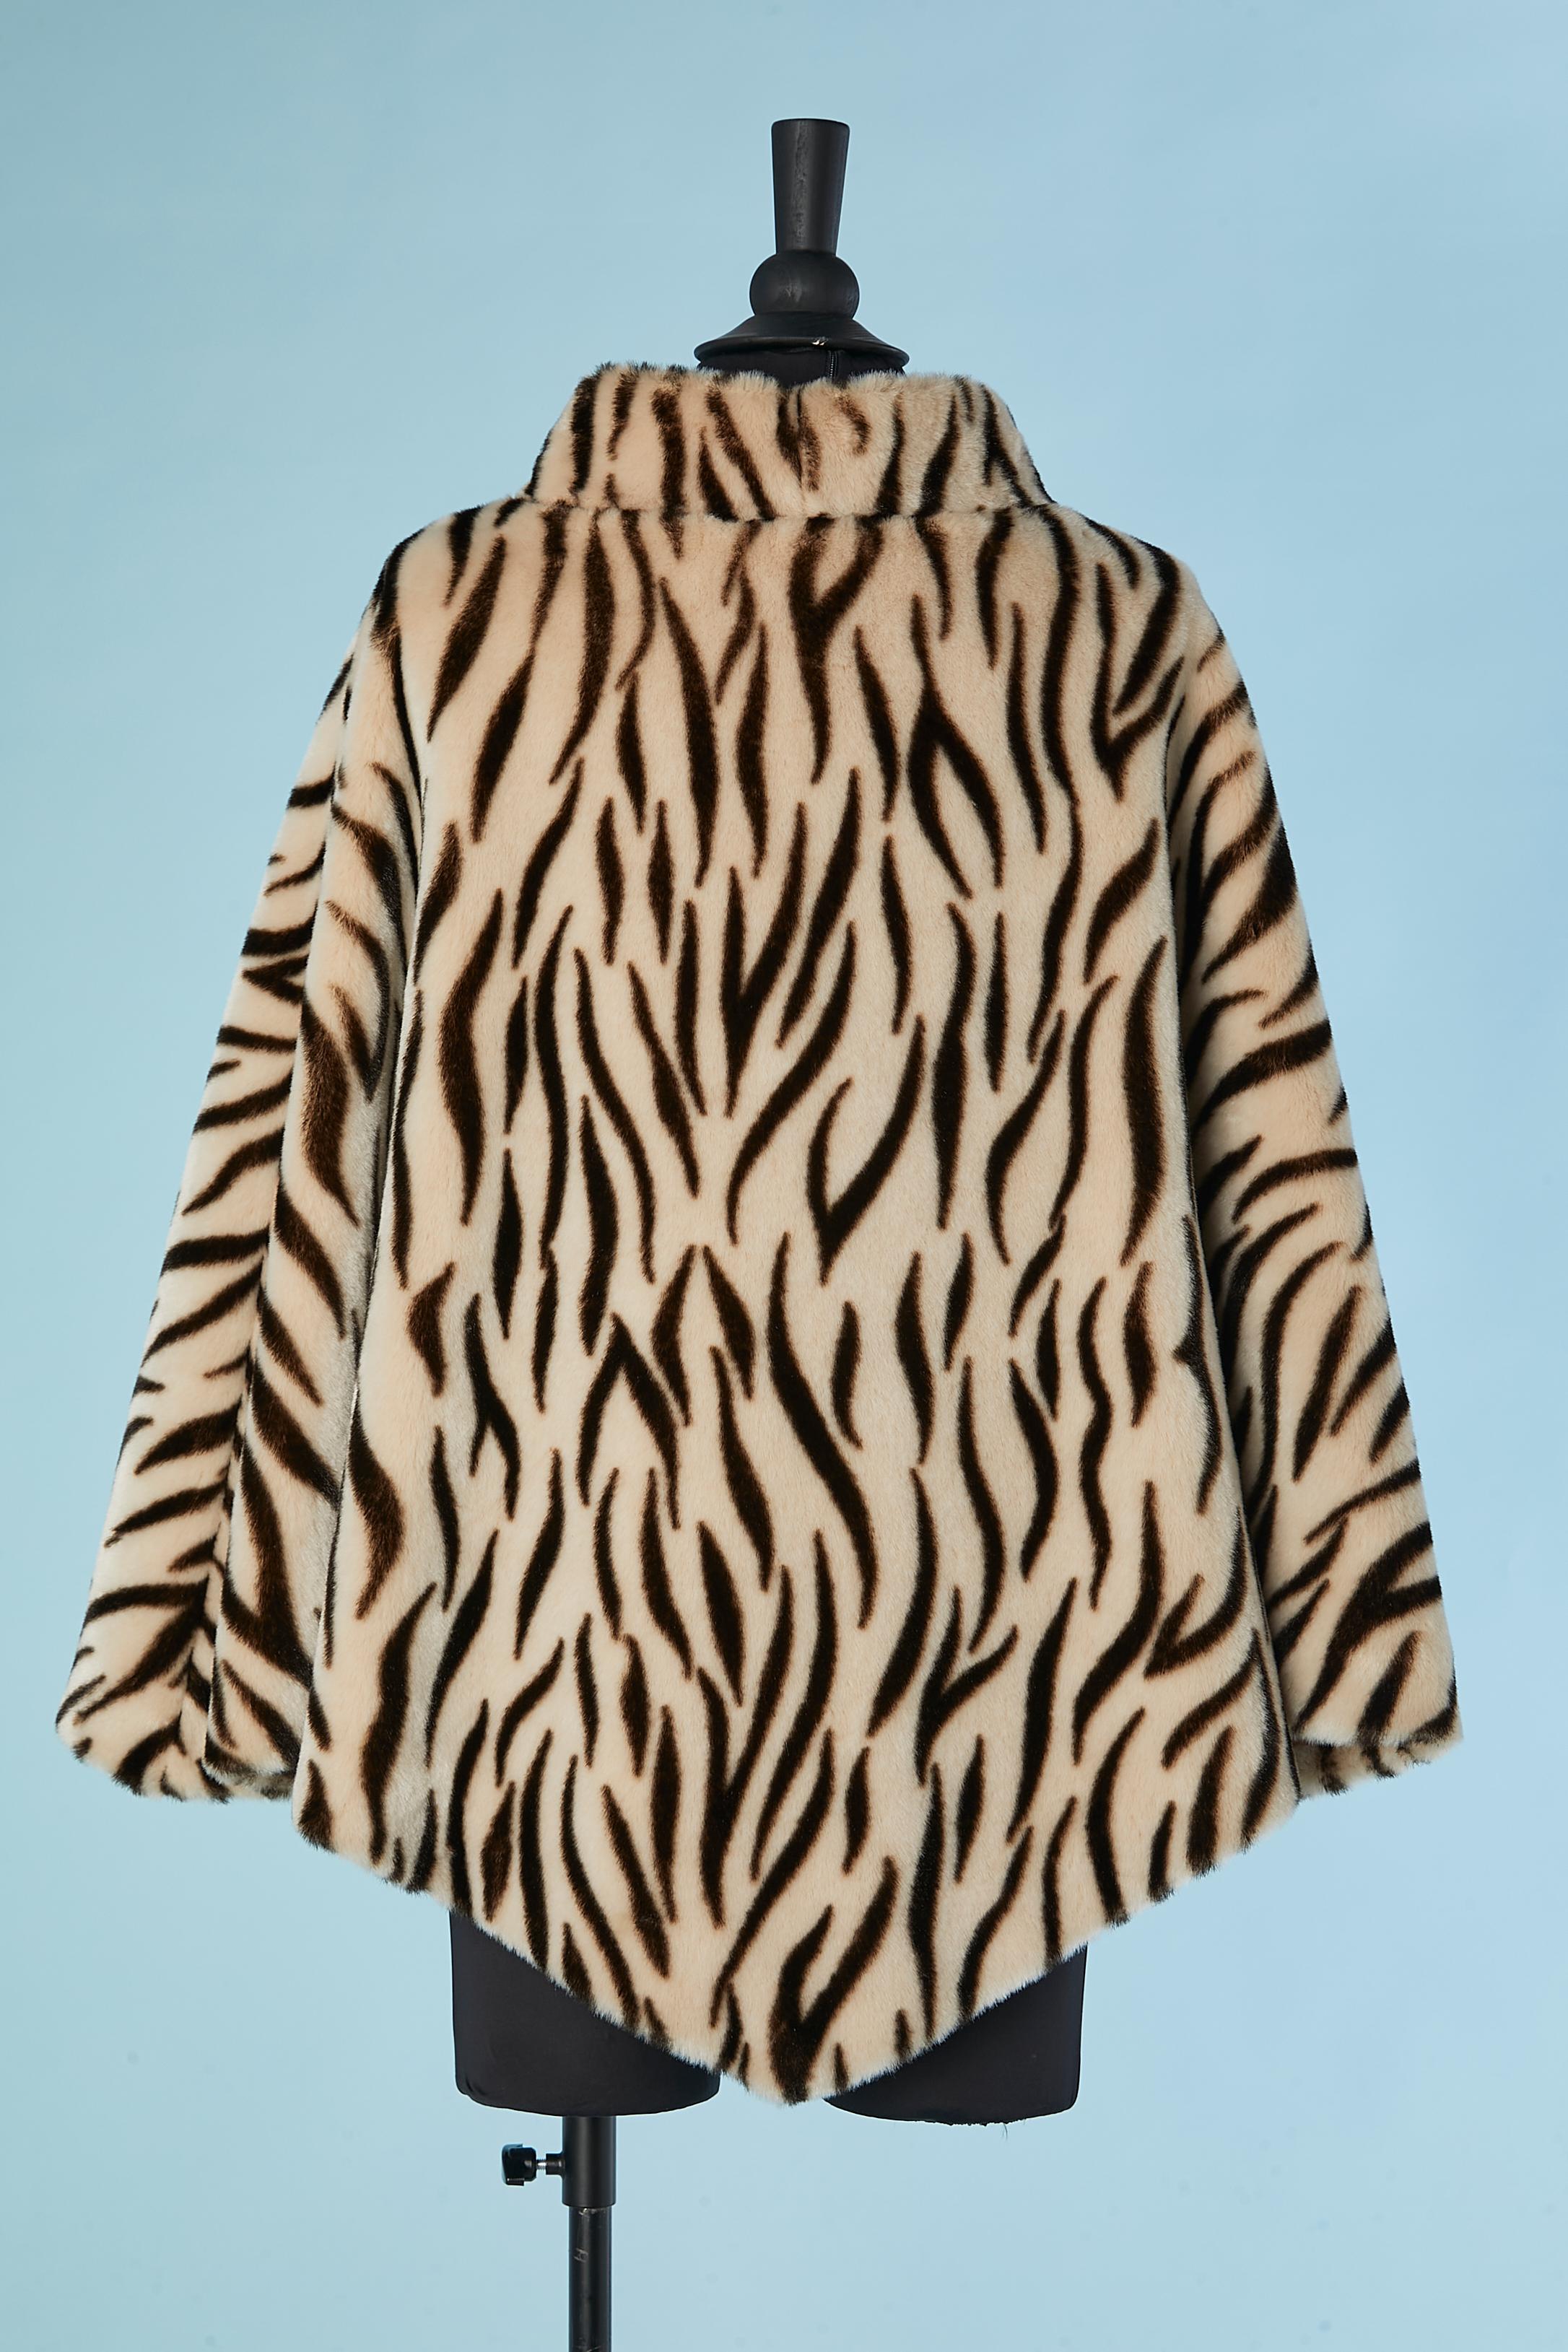 tiger fur jacket